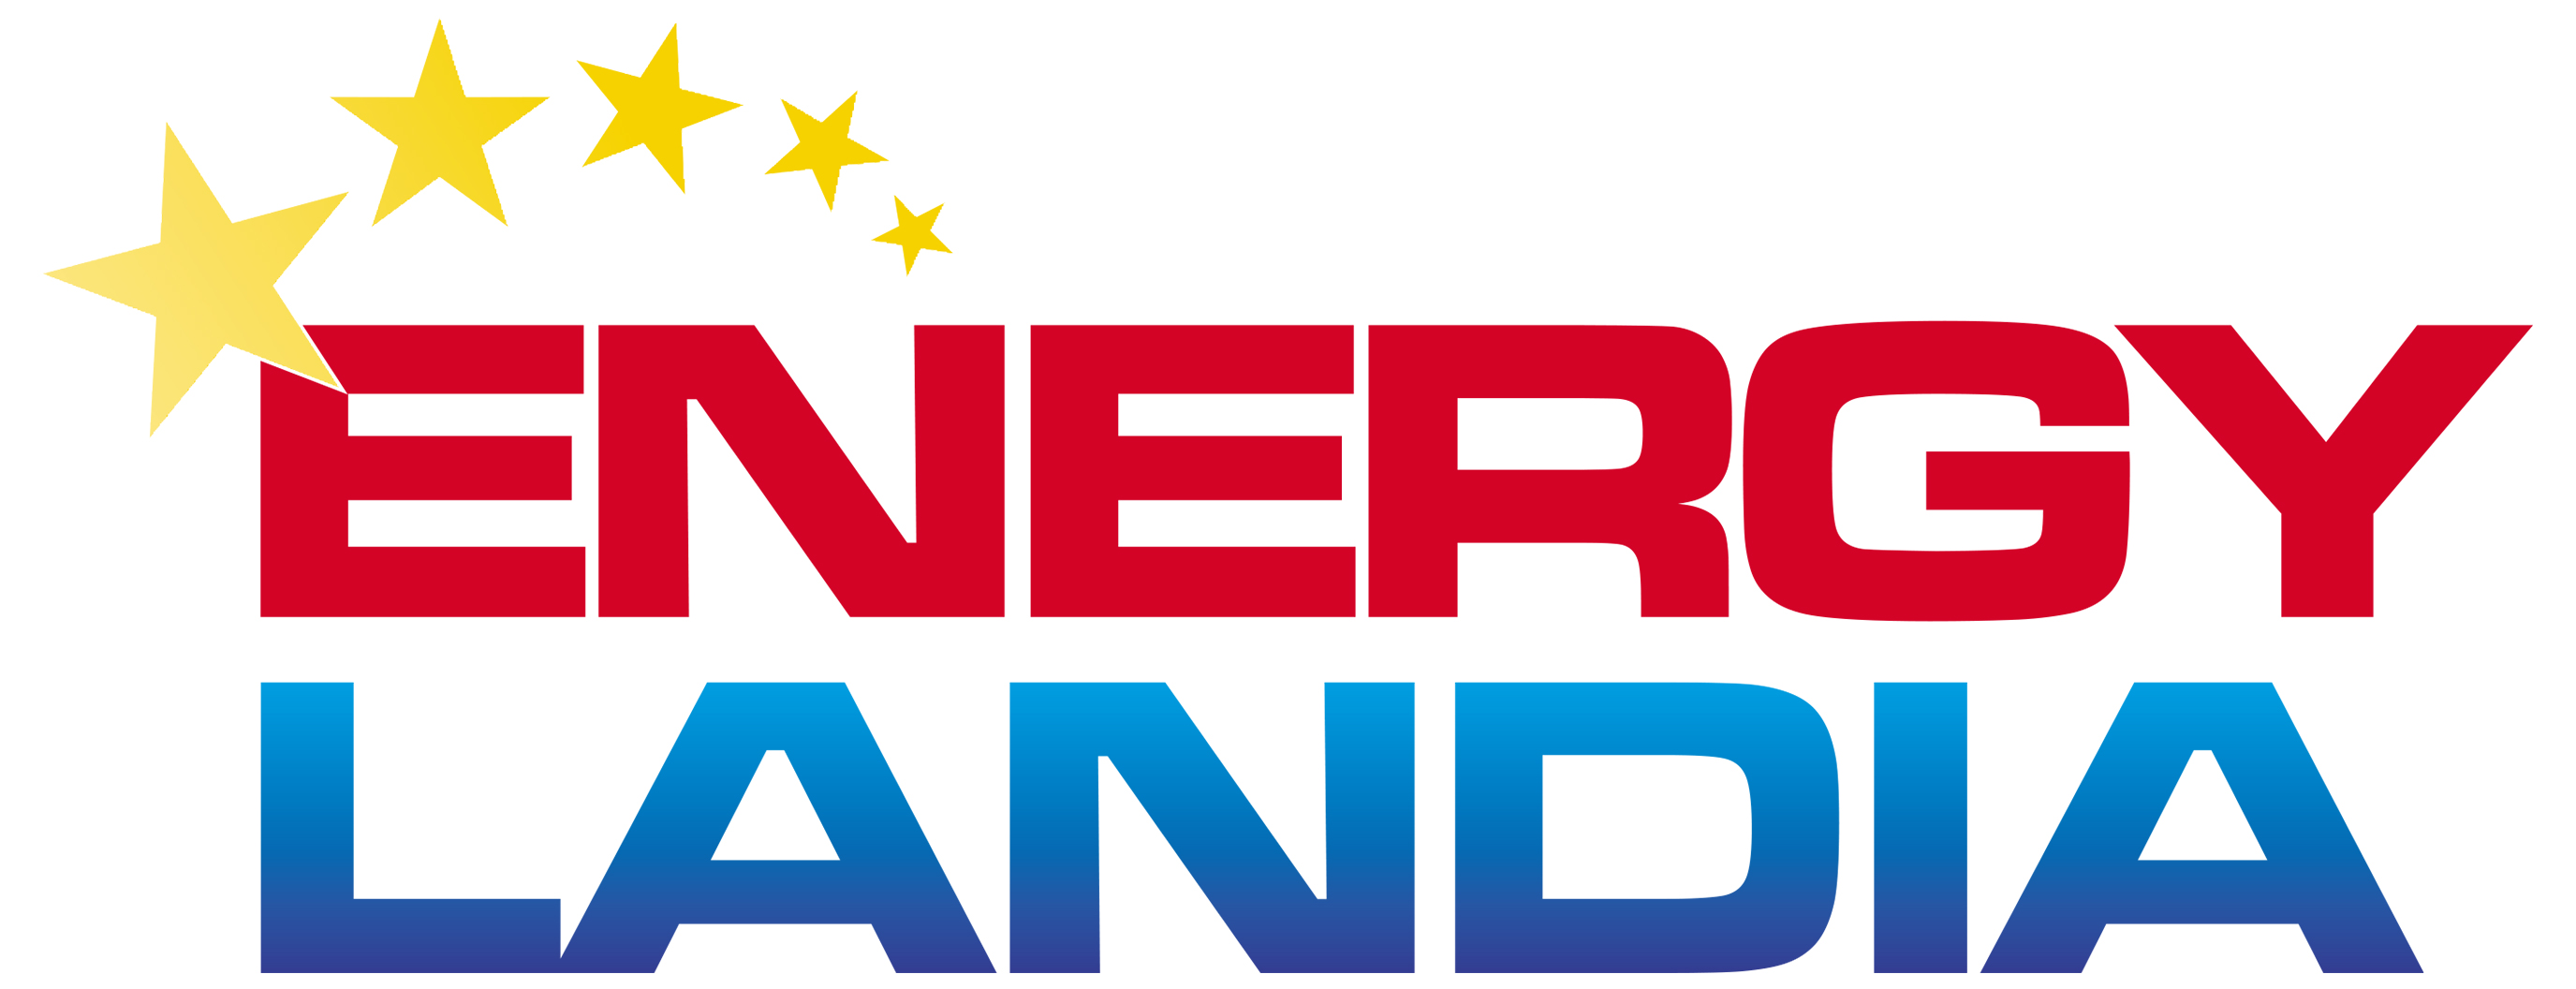 Znalezione obrazy dla zapytania energylandia logo